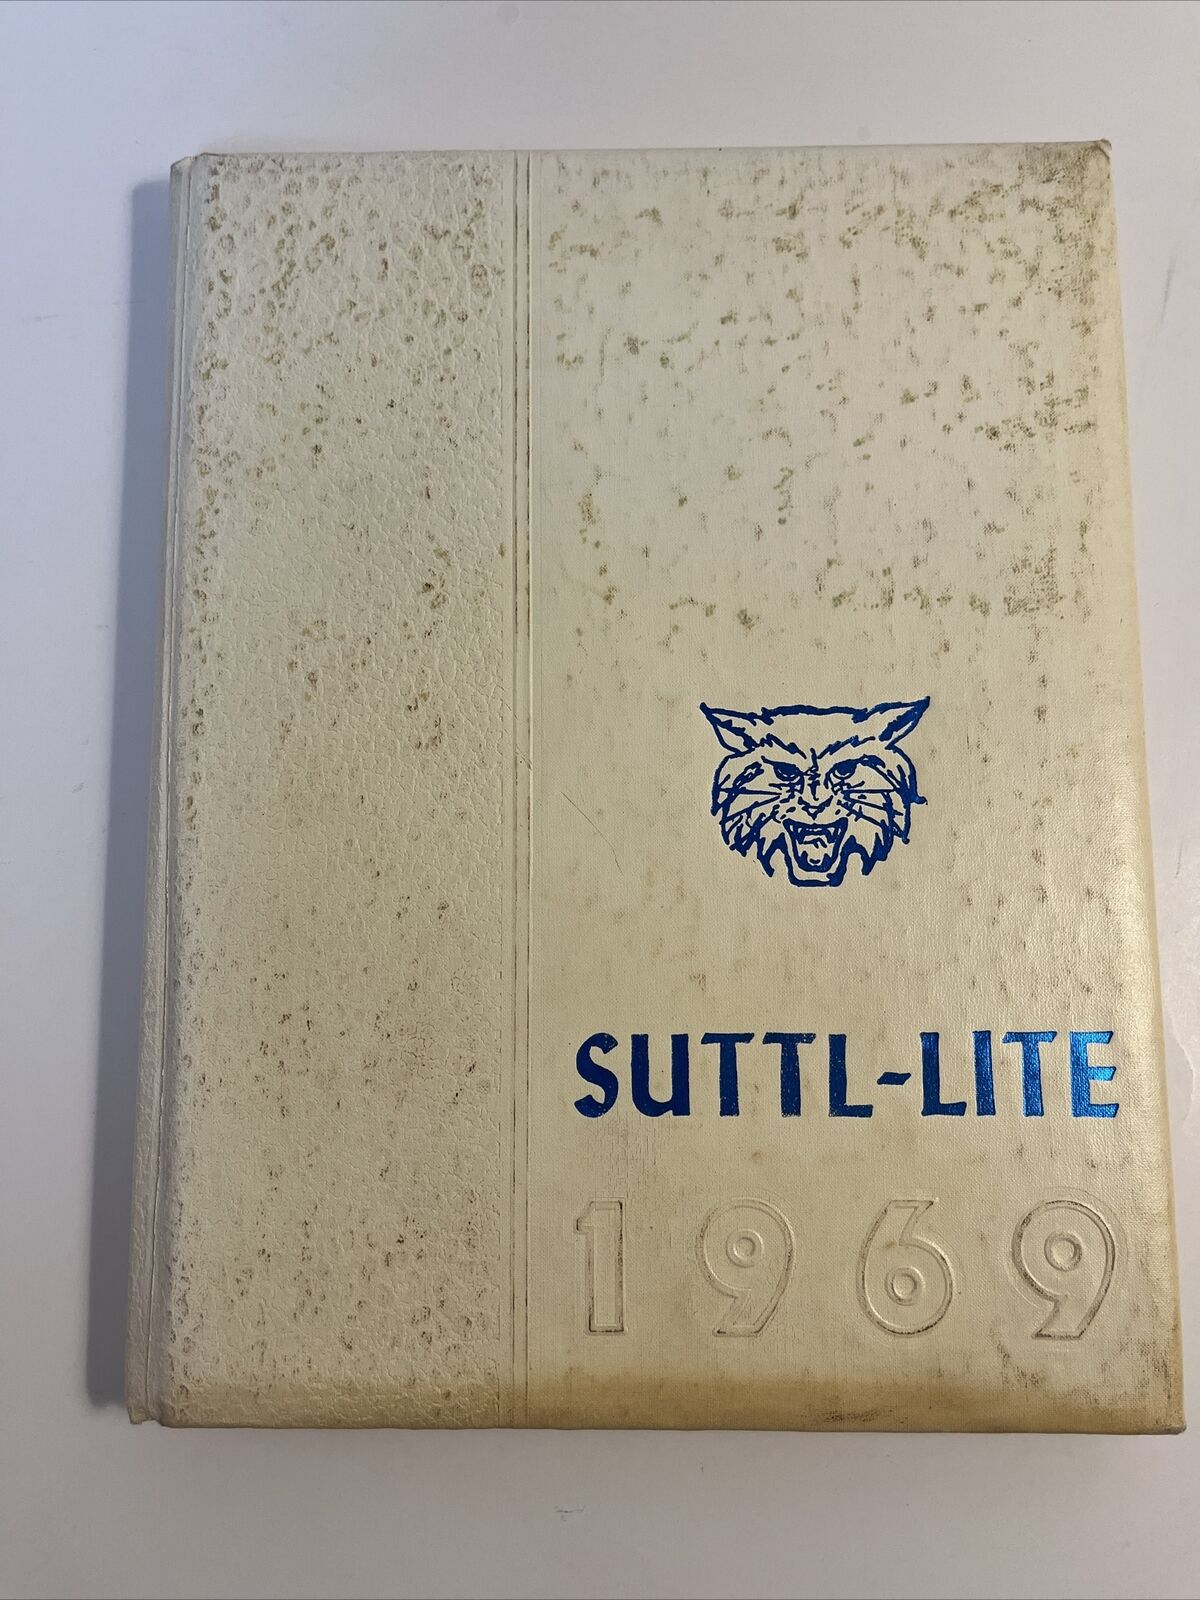 The 1969 Shuttle-Lite, Suttle High School, Suttle, Alabama 